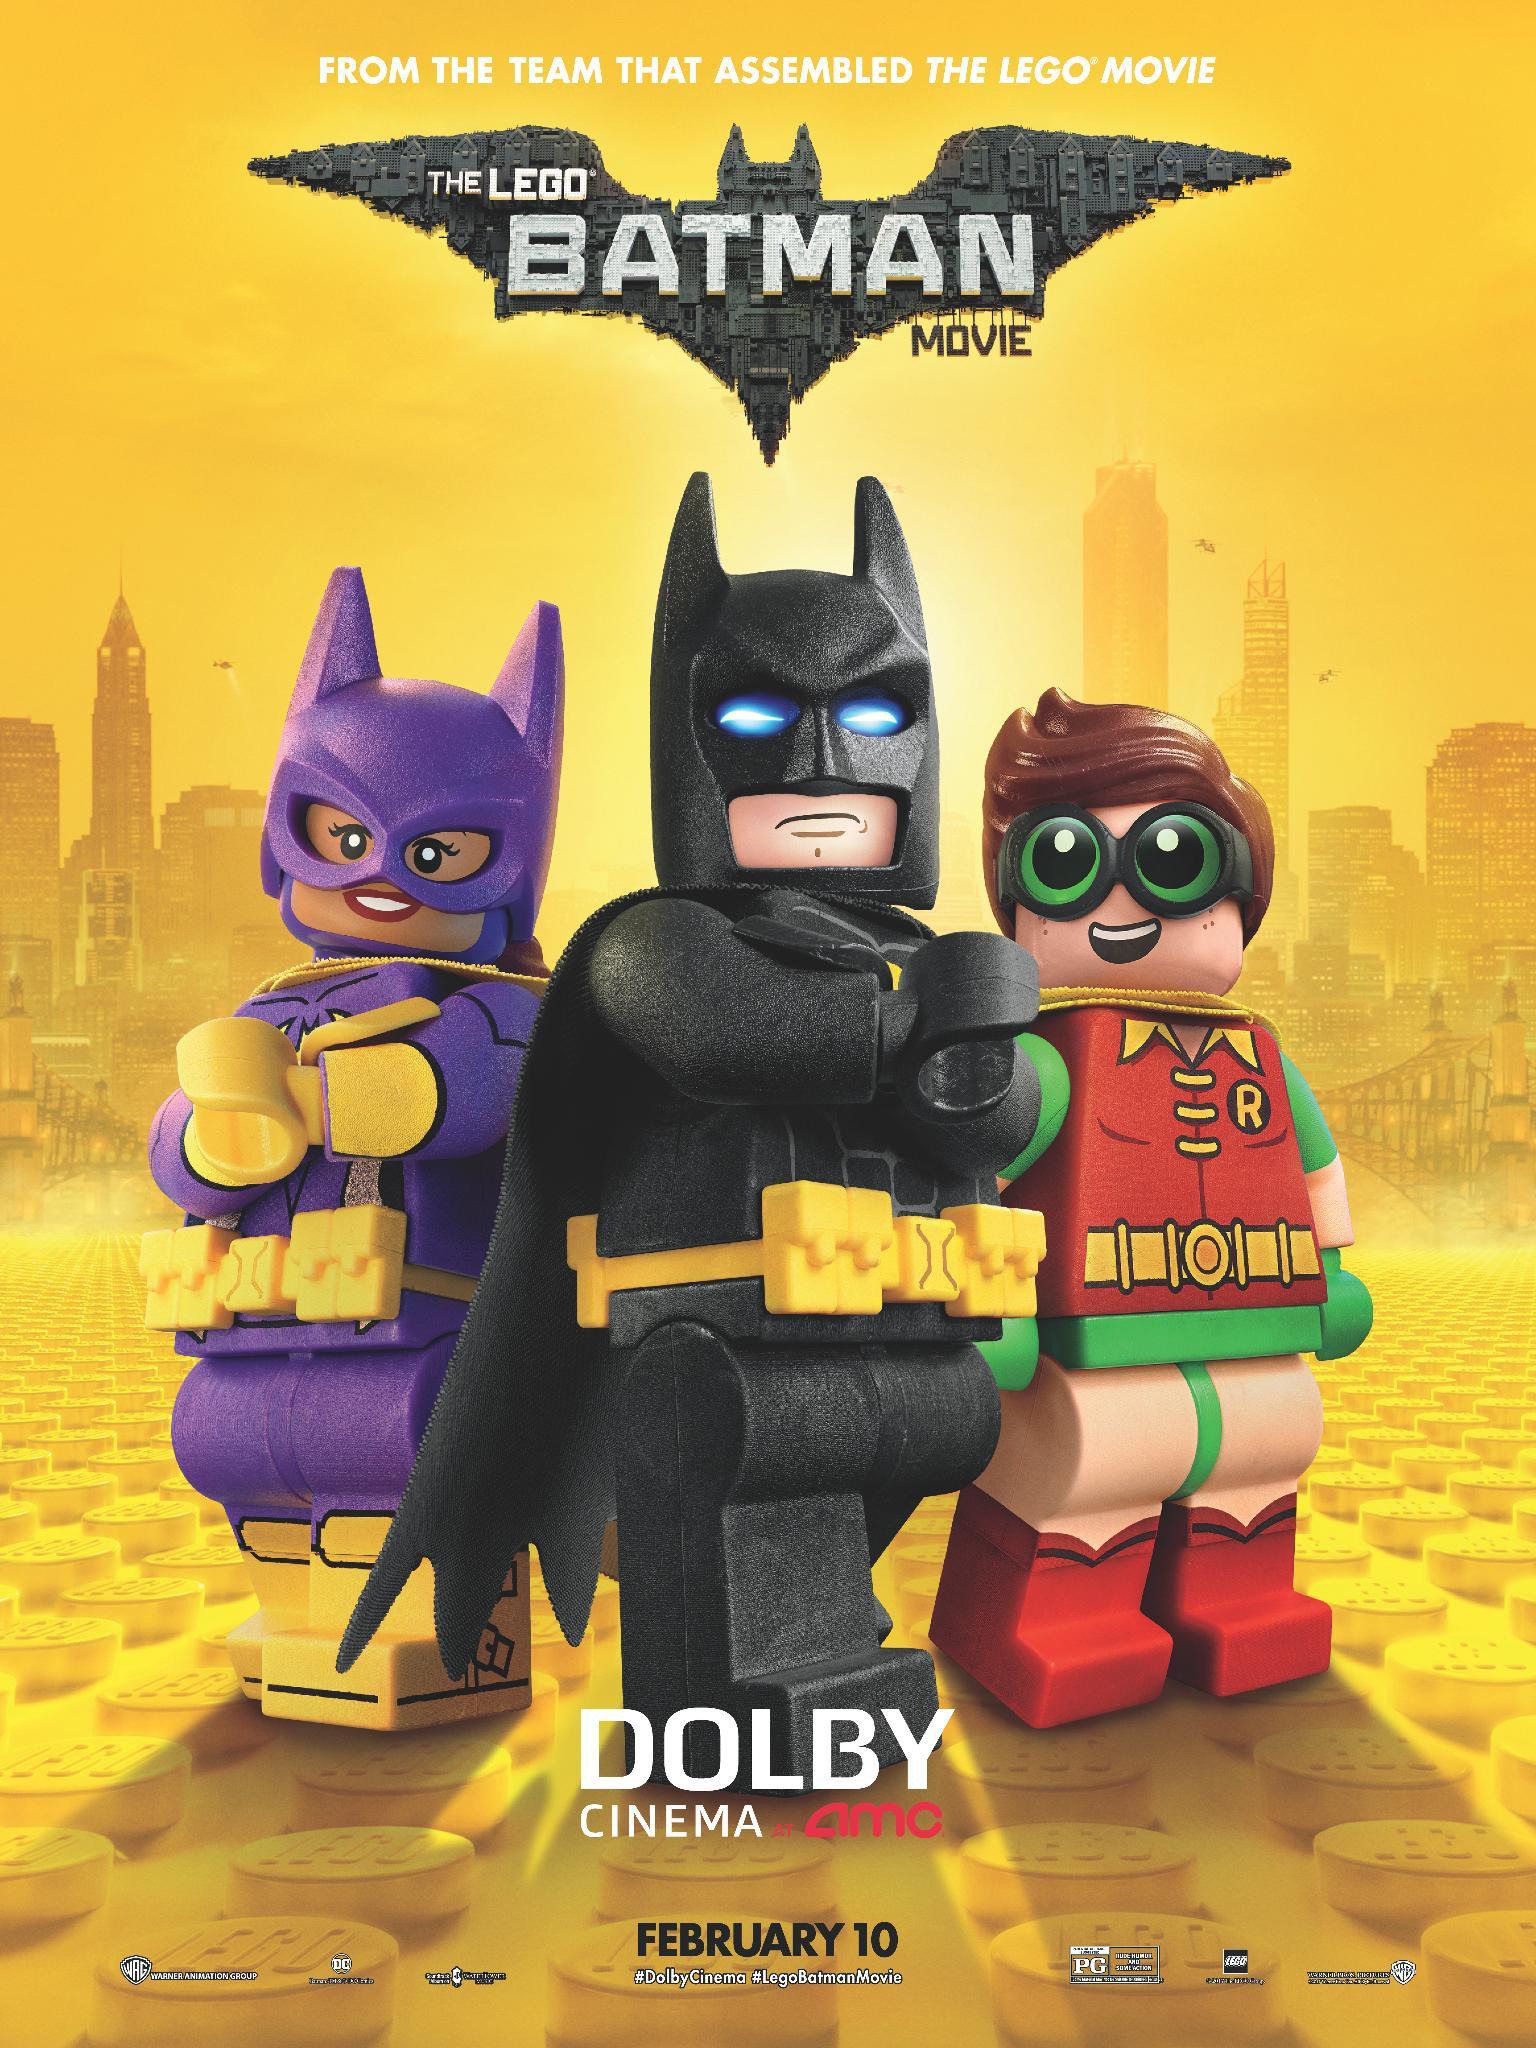 The Lego Batman Movie Movie Poster (#26 of 27) - IMP Awards